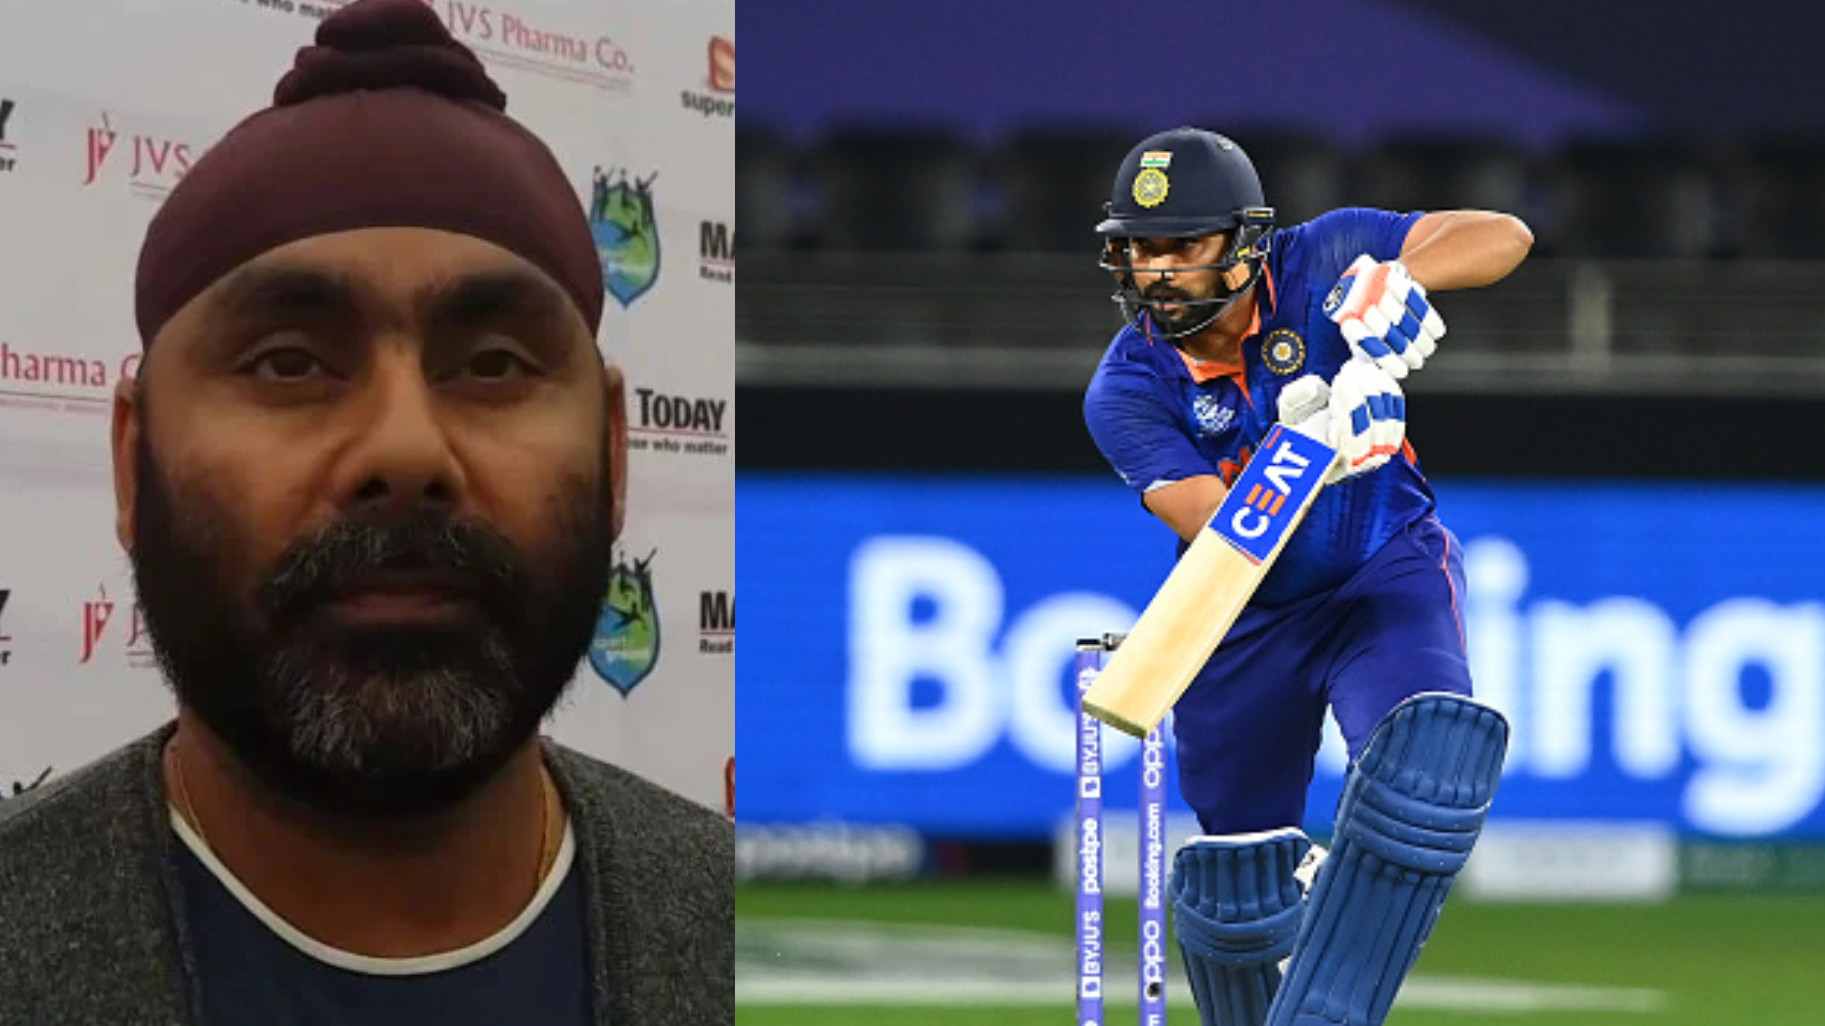 T20 World Cup 2021: Rohit Sharma cannot be a long-term captaincy option, says Sarandeep Singh